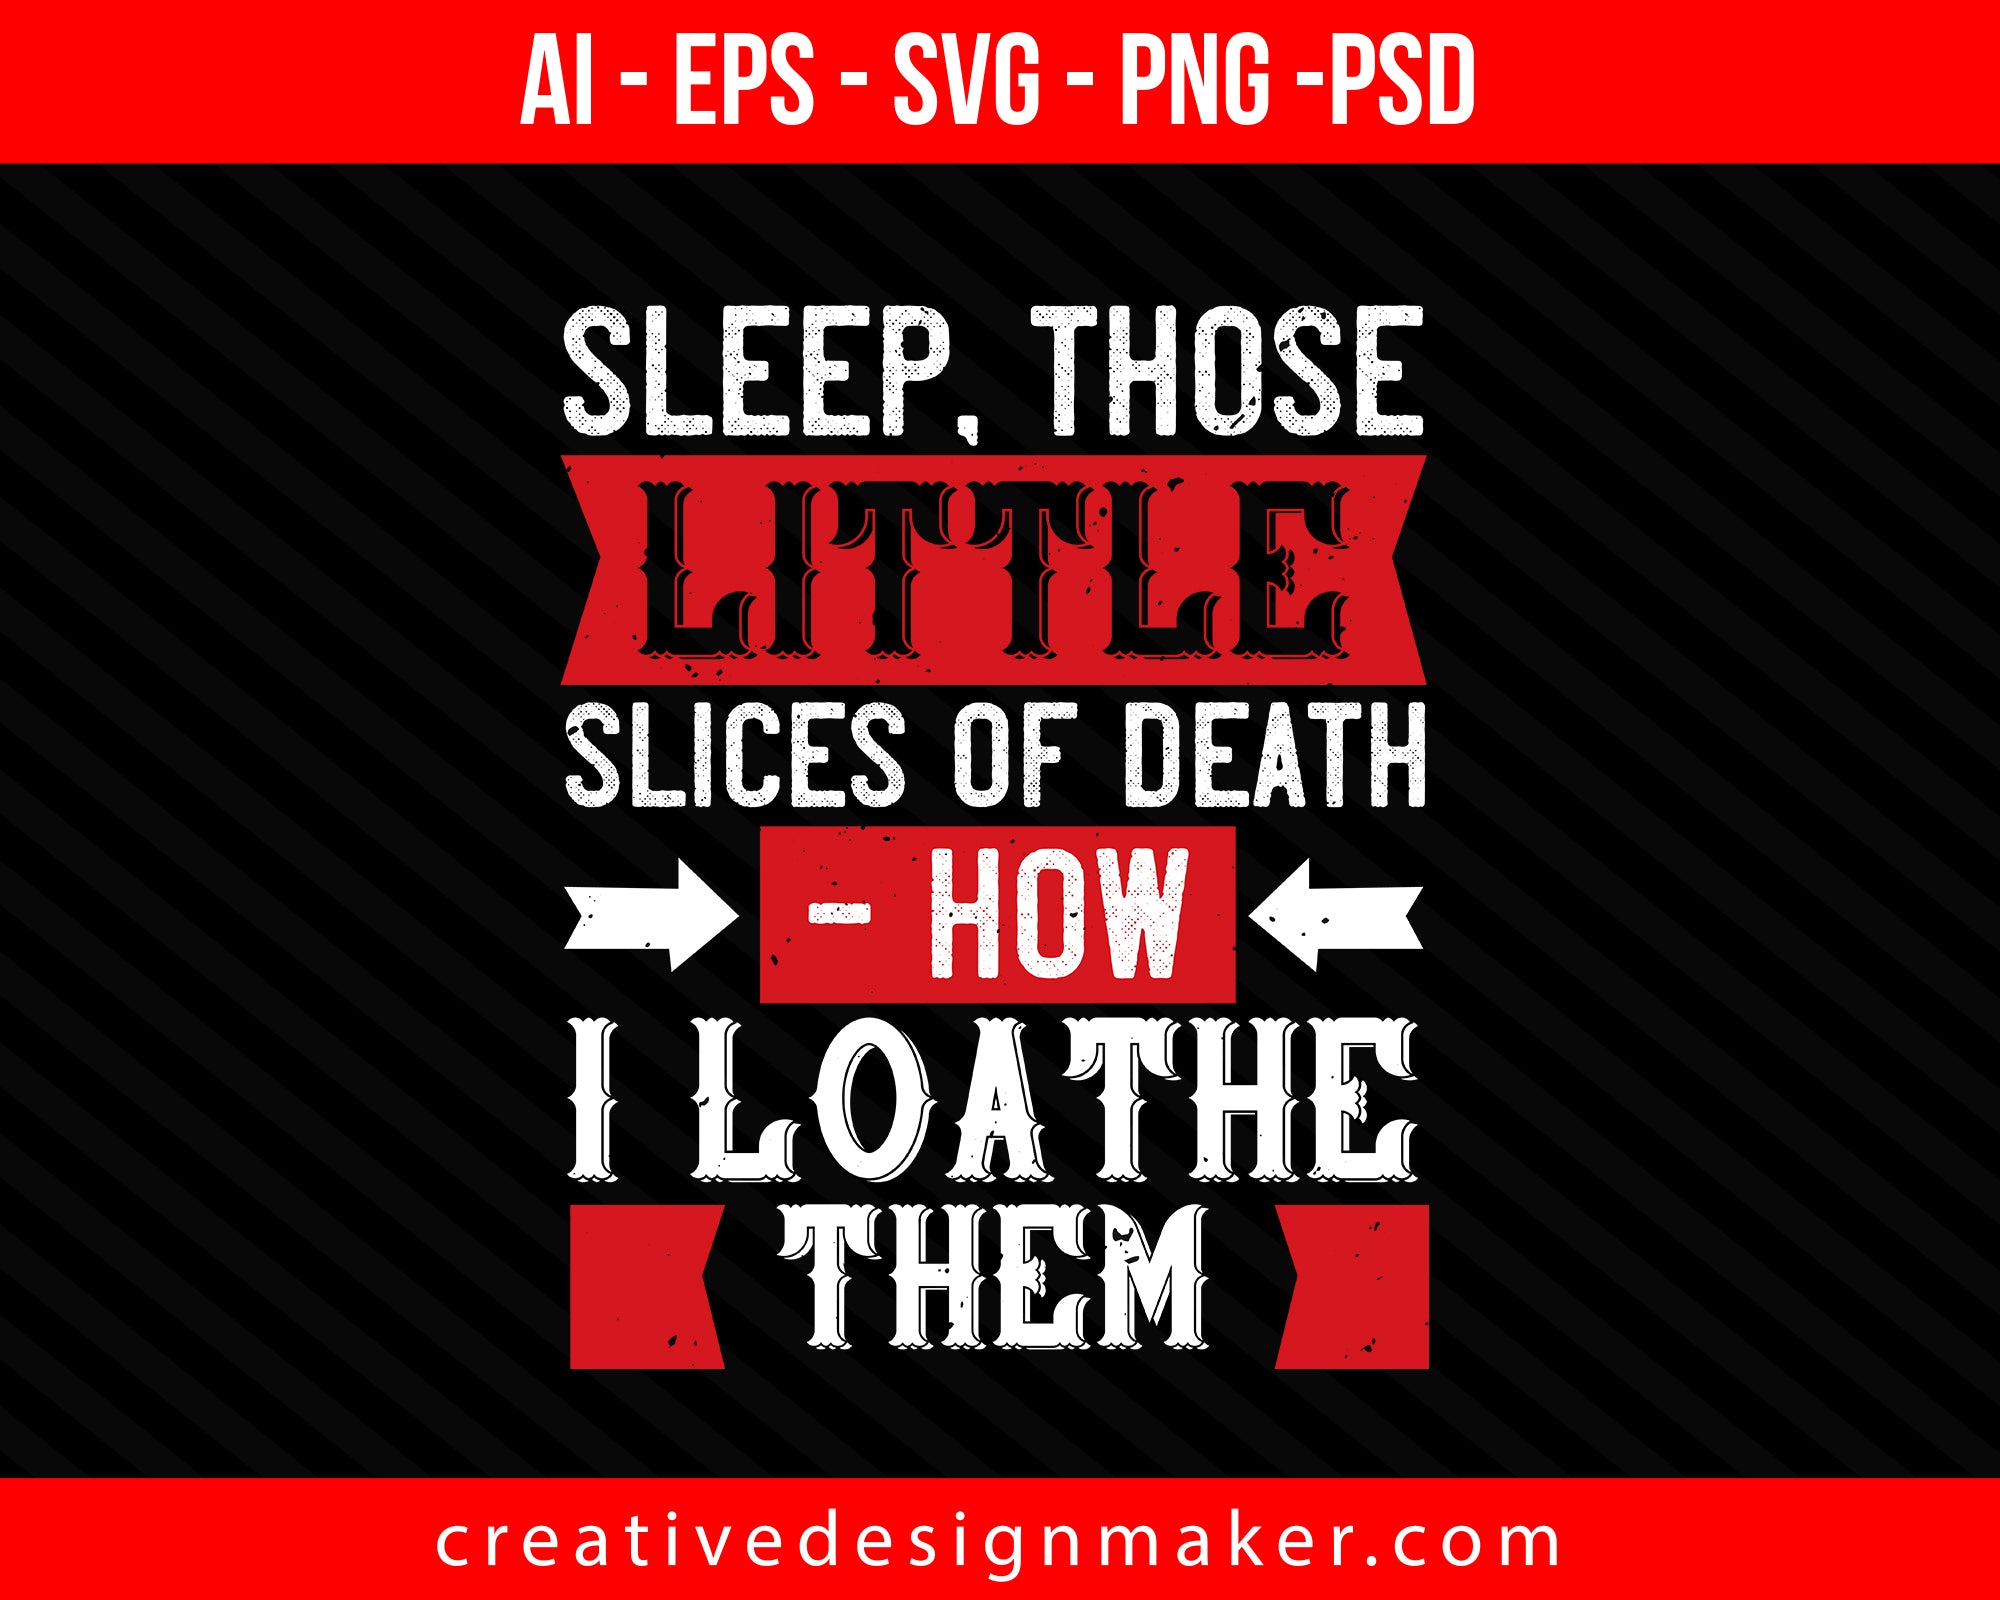 Sleep, those little slices of death how I loathe them Print Ready Editable T-Shirt SVG Design!